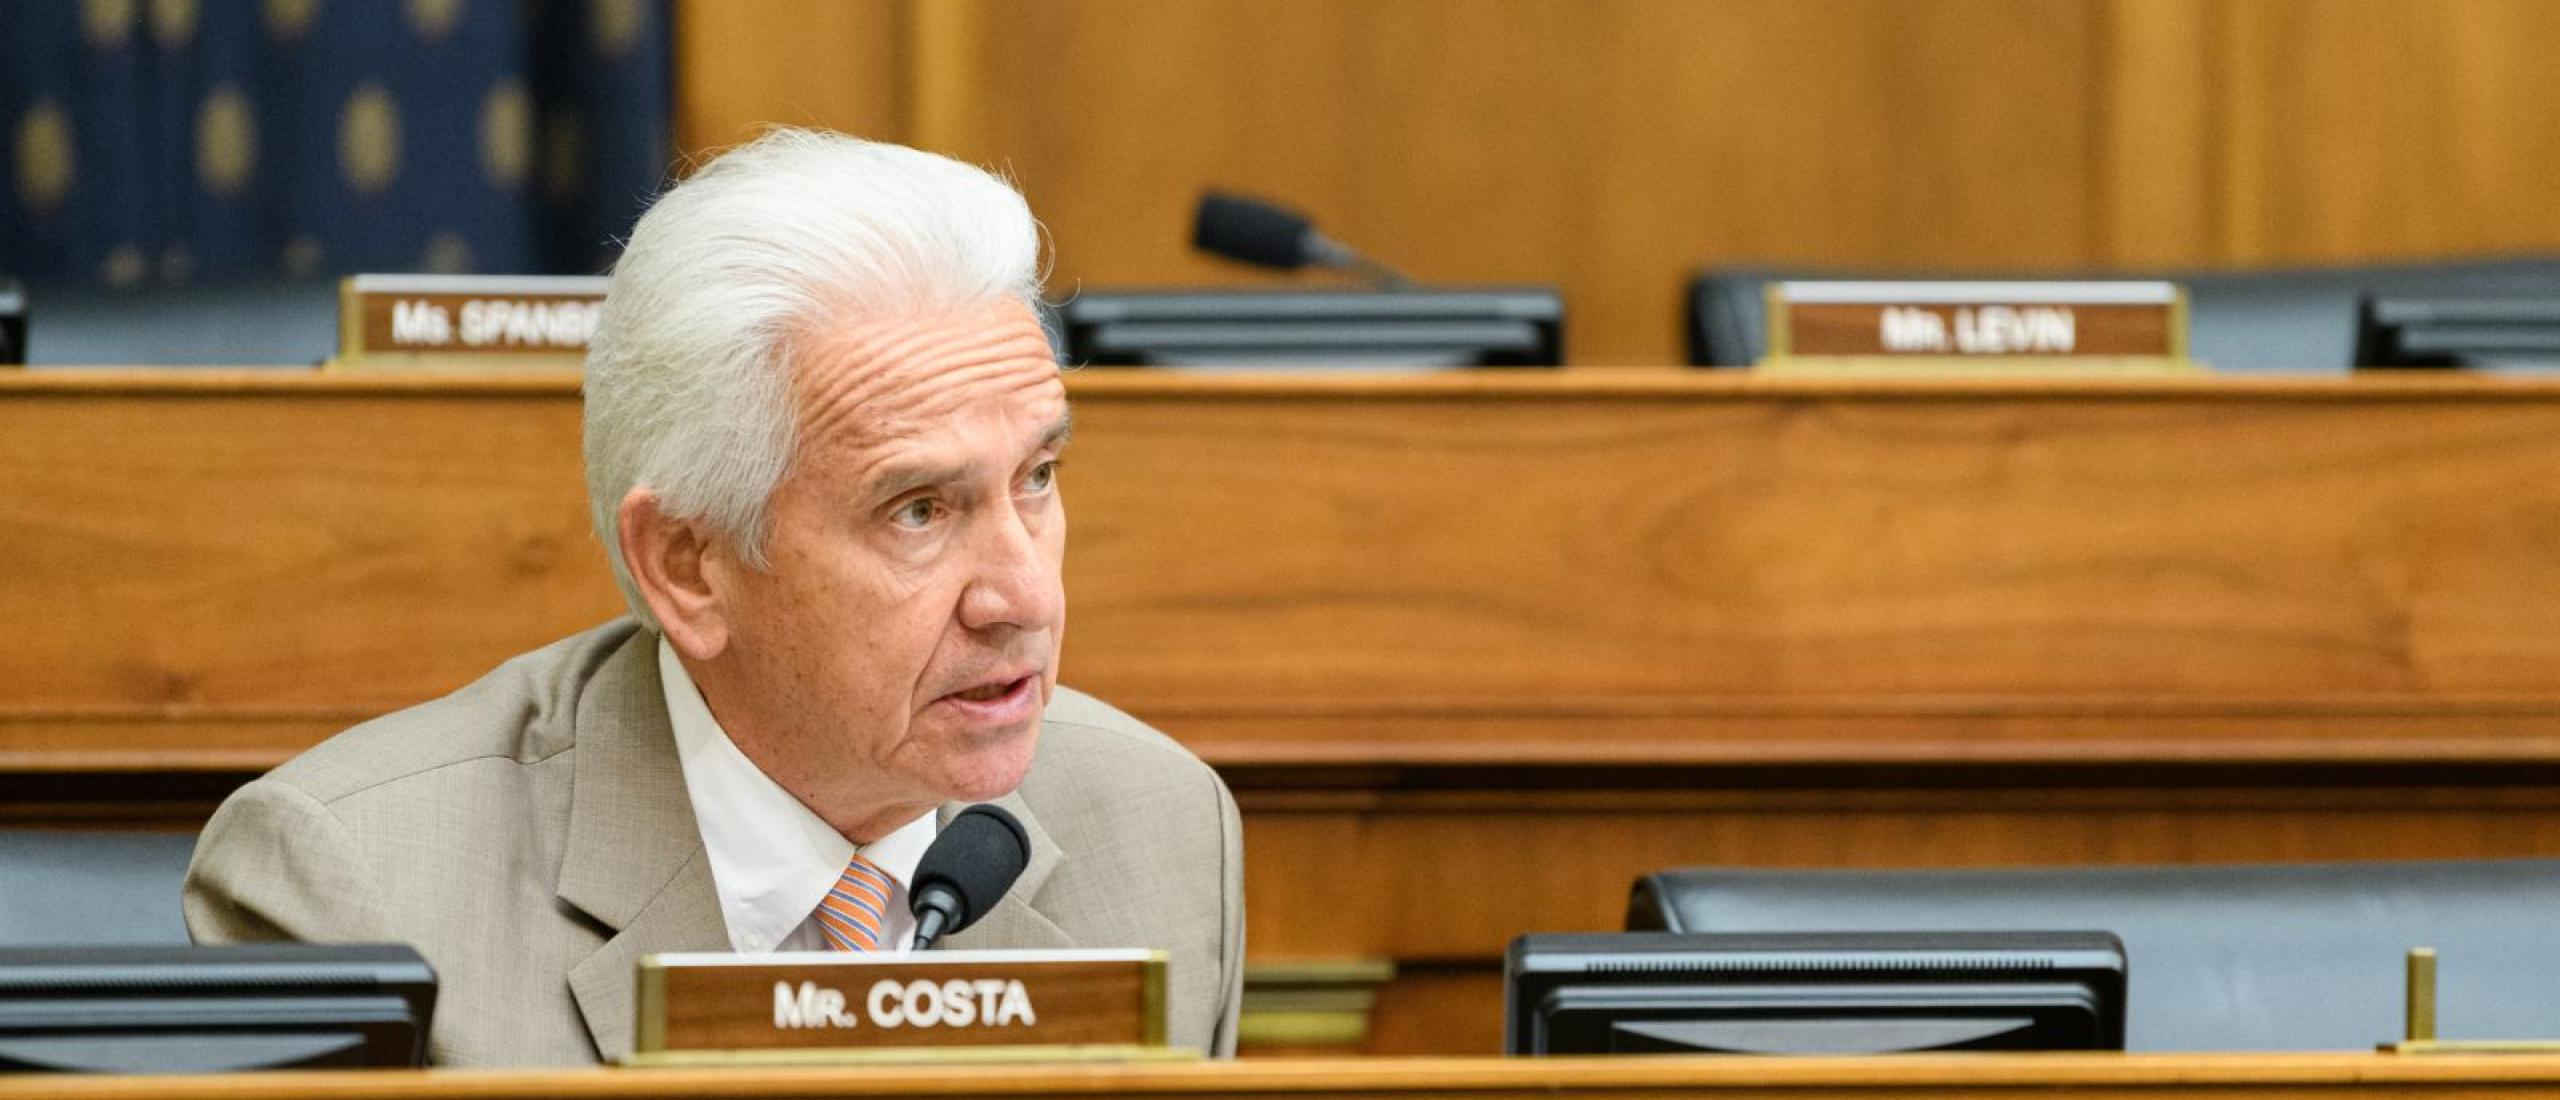 Congressman Jim Costa